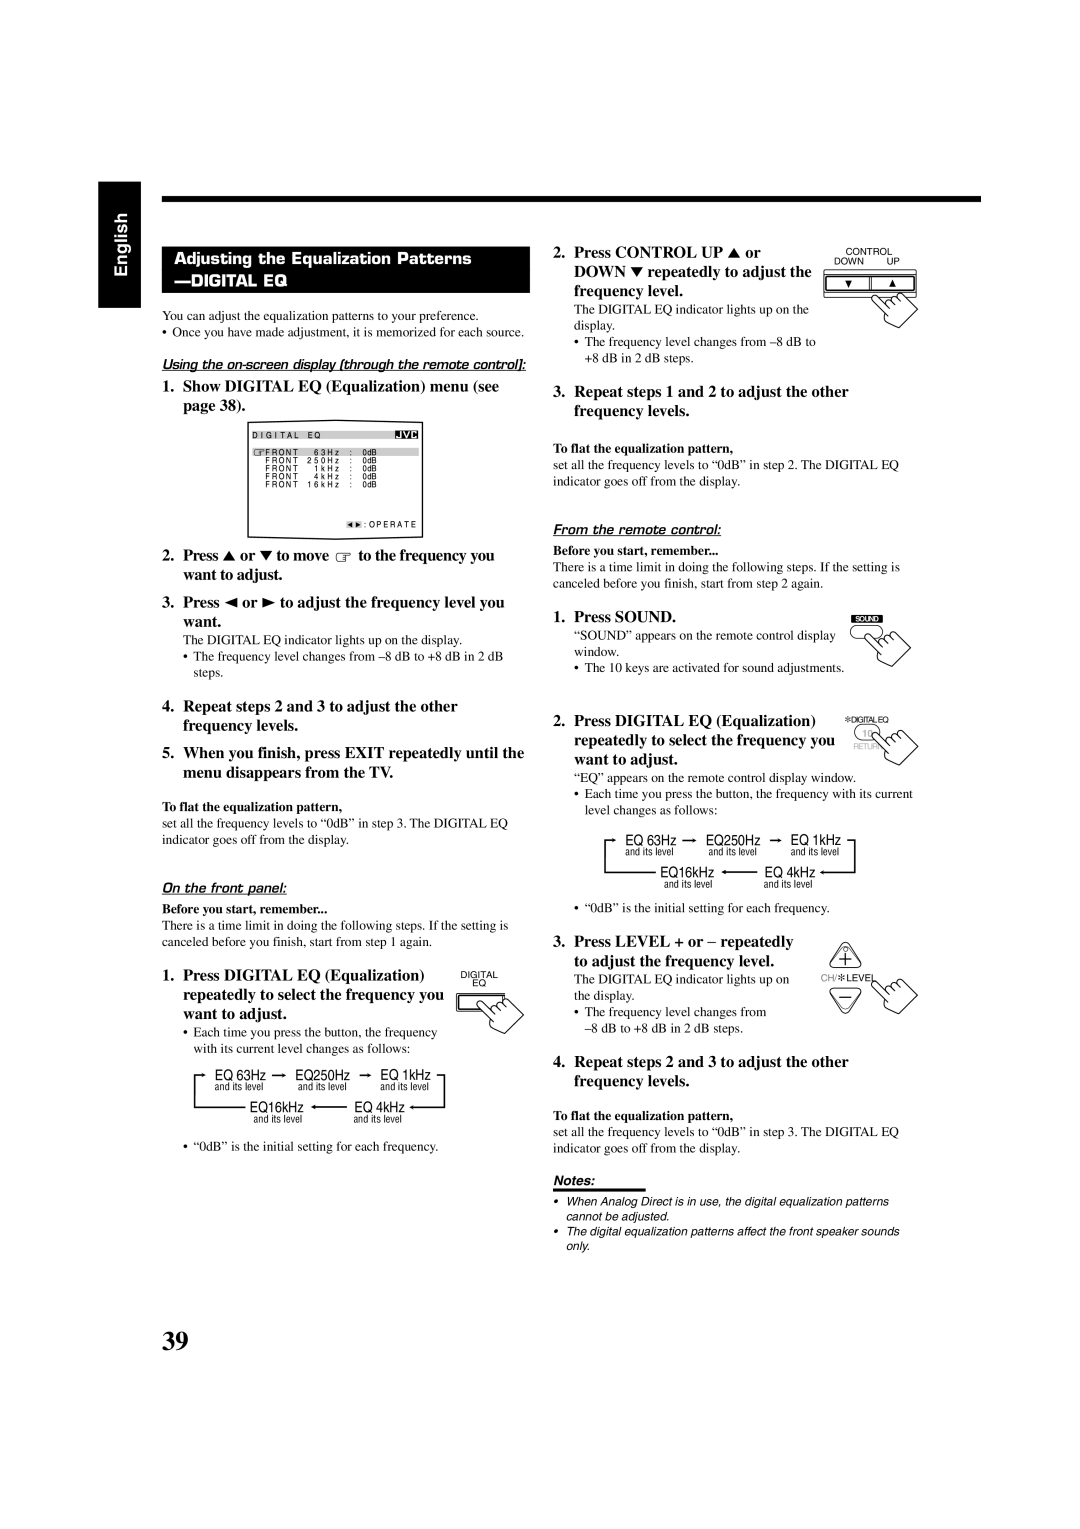 JVC RX-8020VBK manual English, Adjusting the Equalization Patterns DIGITAL EQ, Press SOUND 